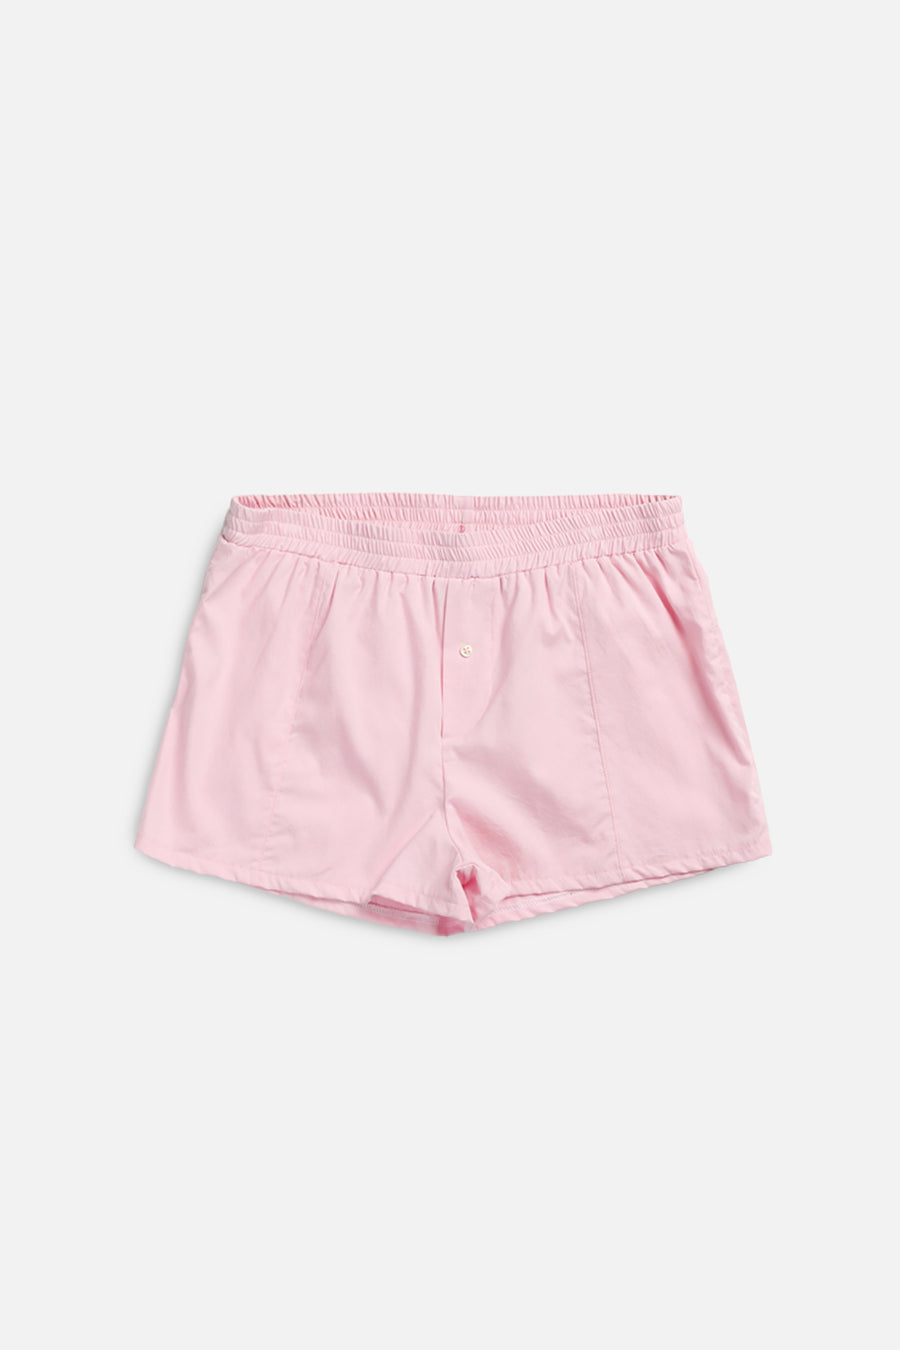 Rework Oxford Mini Boxer Shorts - L, XXL